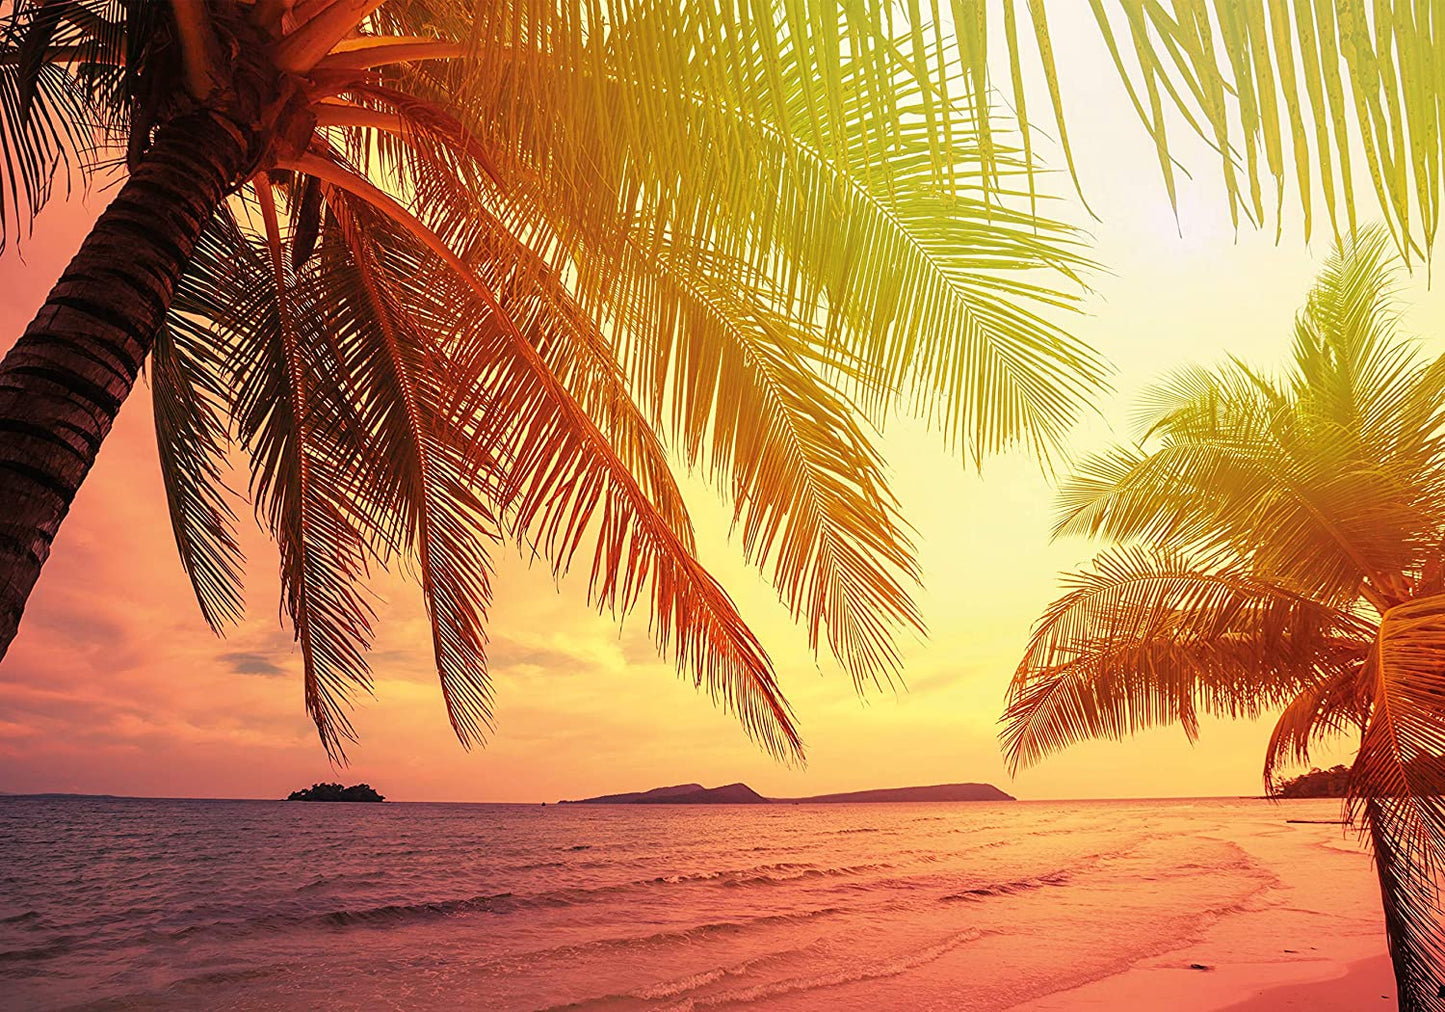 PICSonPAPER Hochwertiges Poster Tropischer Strand, 100 cm breit x 70 cm hoch, Dekoration, Kunstdruck, Wandbild, Fineartprint, Sonnenuntergang, Palmen, Meer